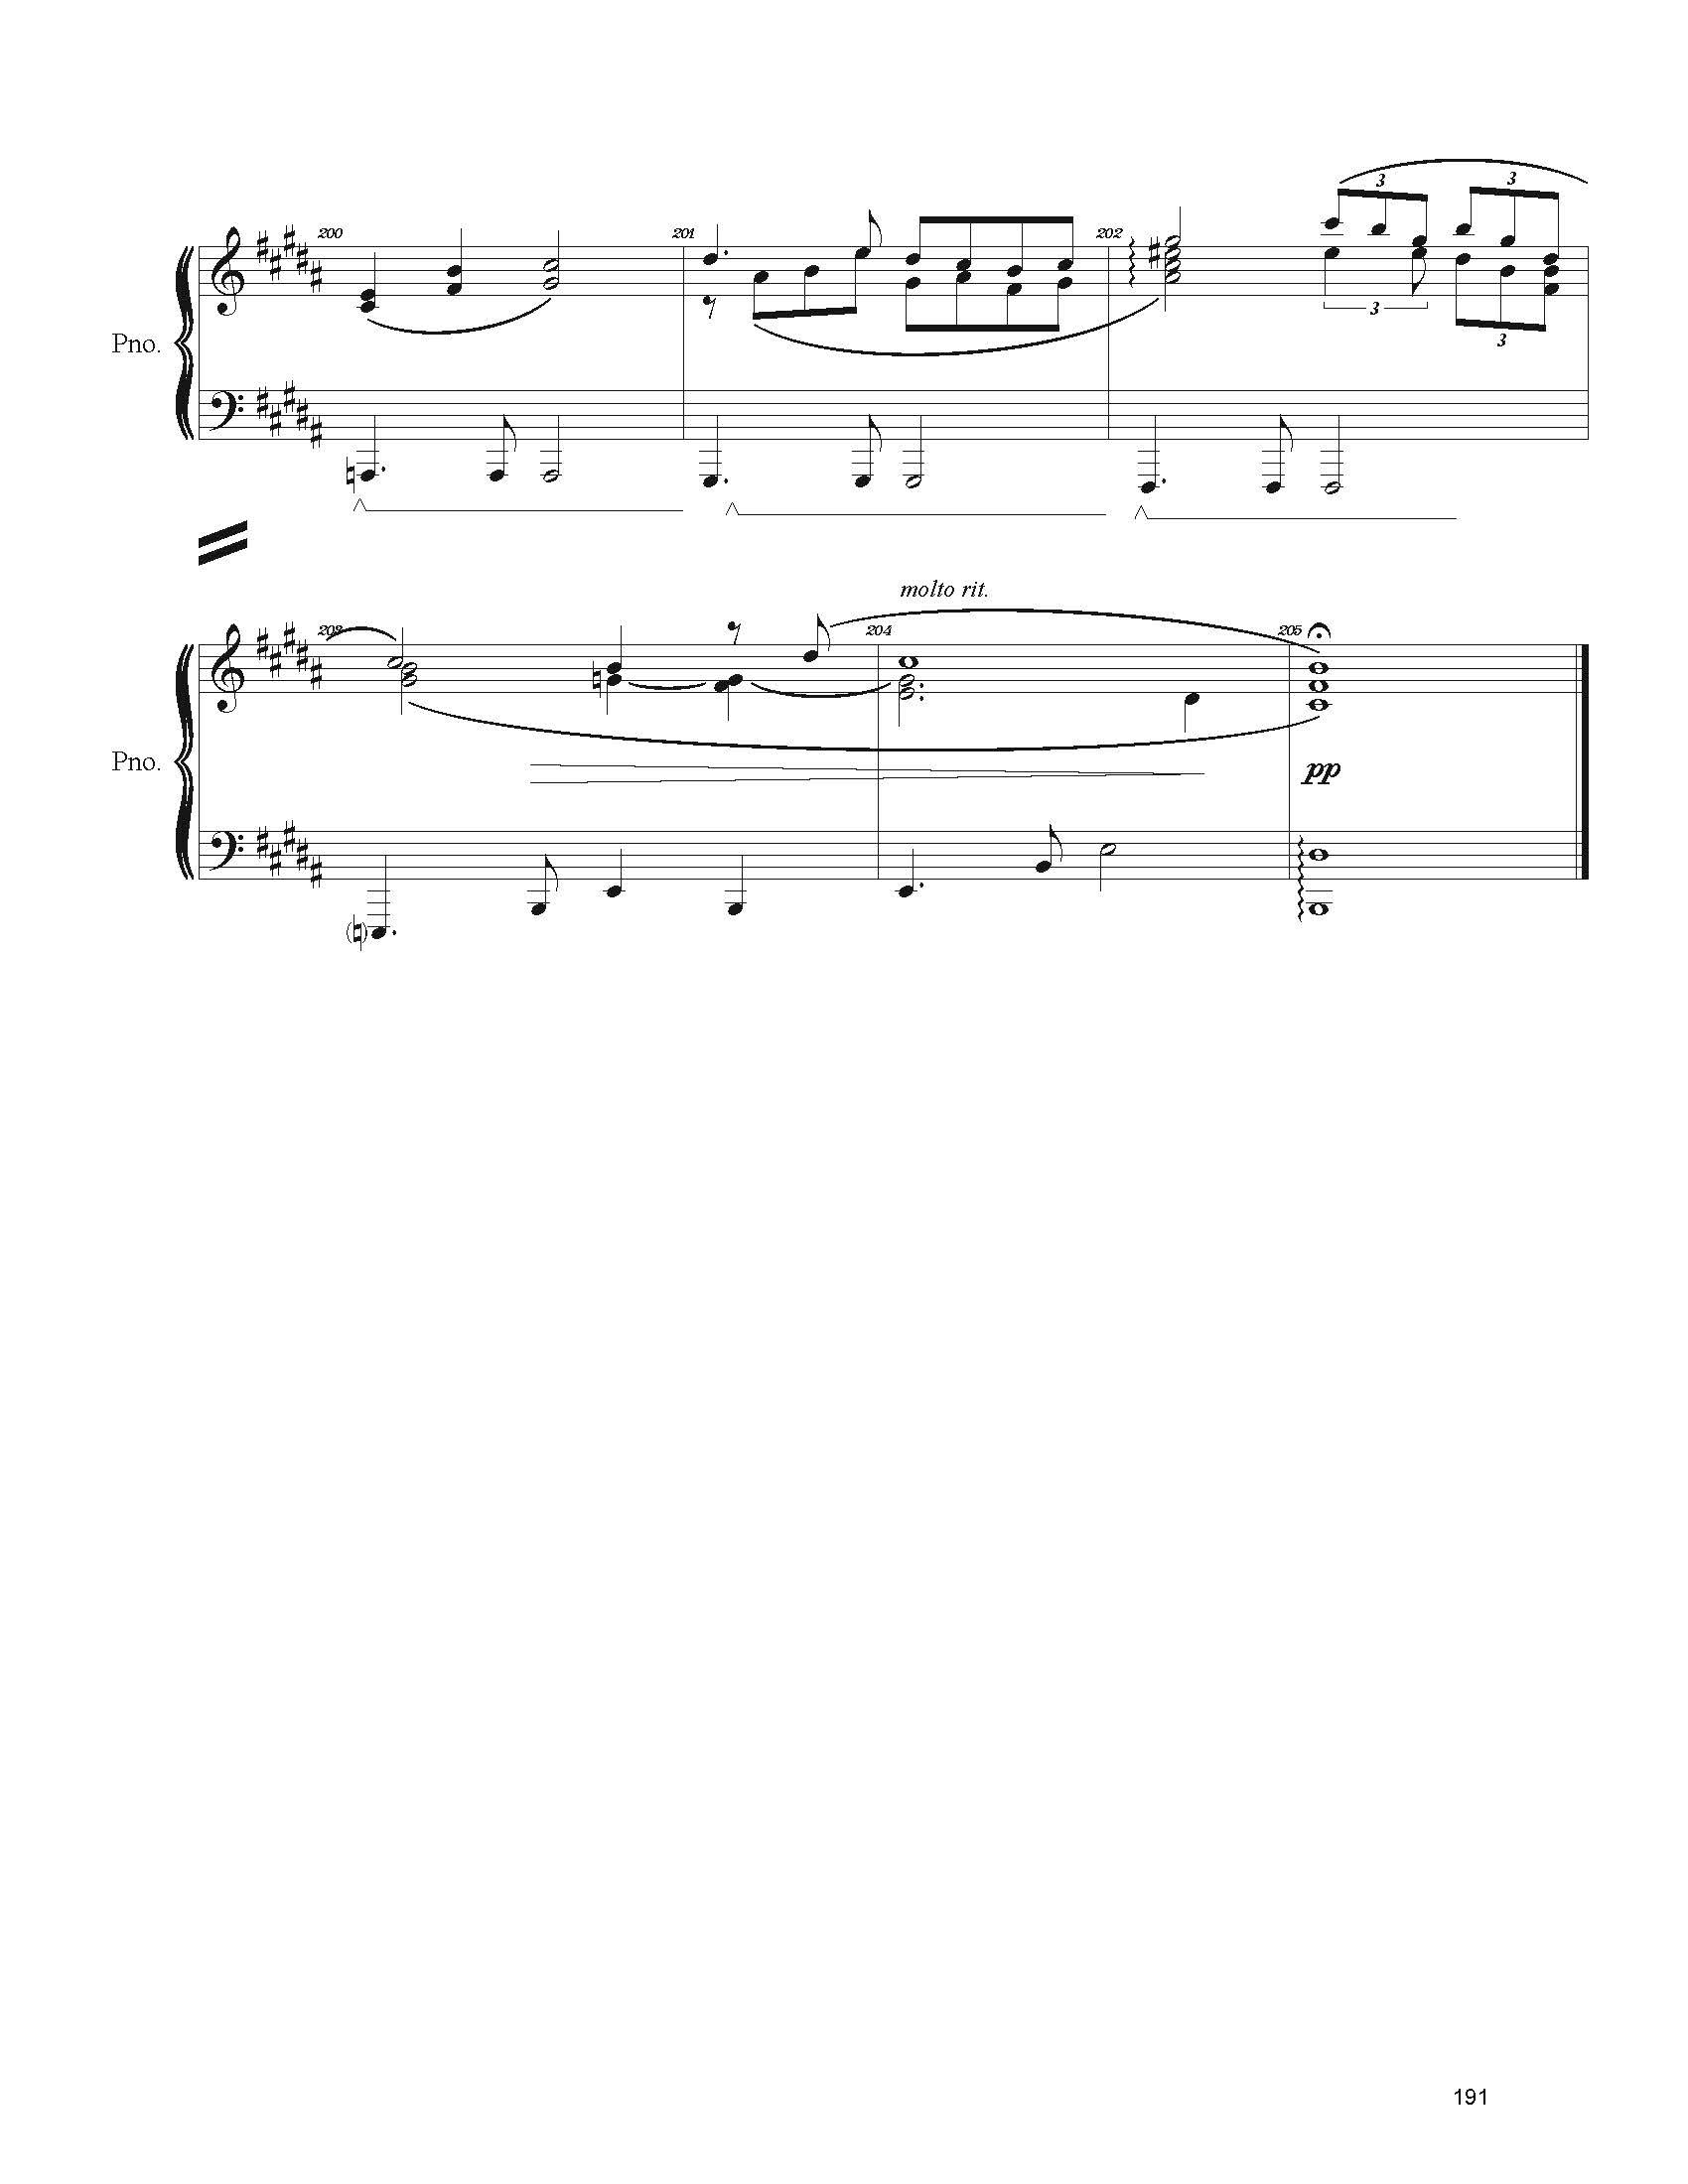 FULL PIANO VOCAL SCORE DRAFT 1 - Score_Page_191.jpg